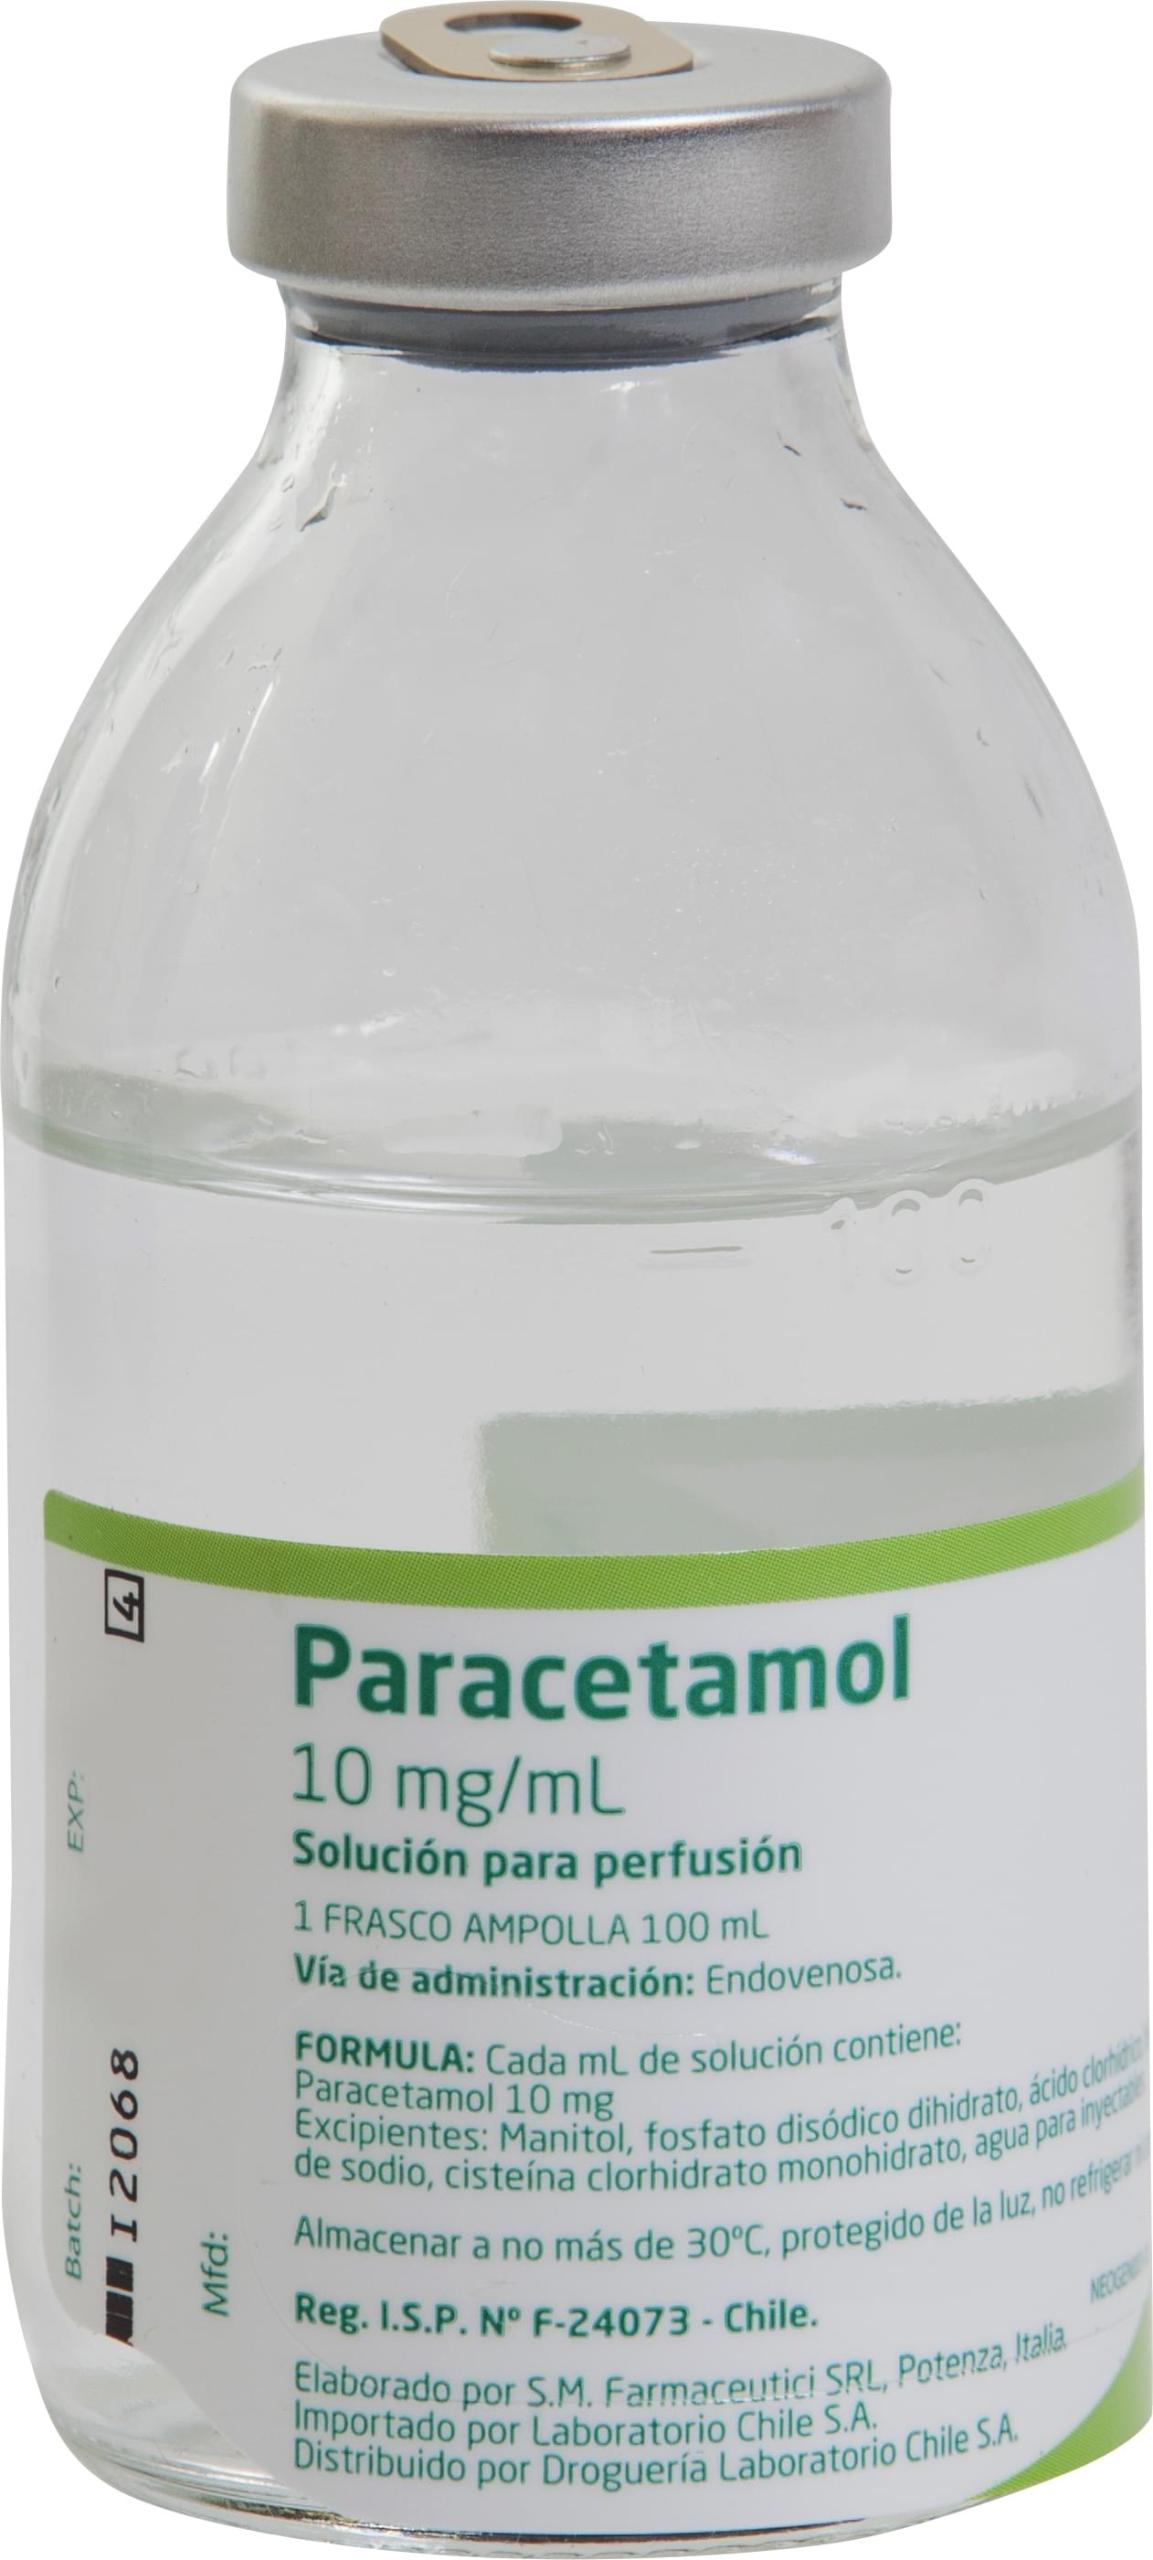 Etiqueta de Paracetamol de diez miligramos